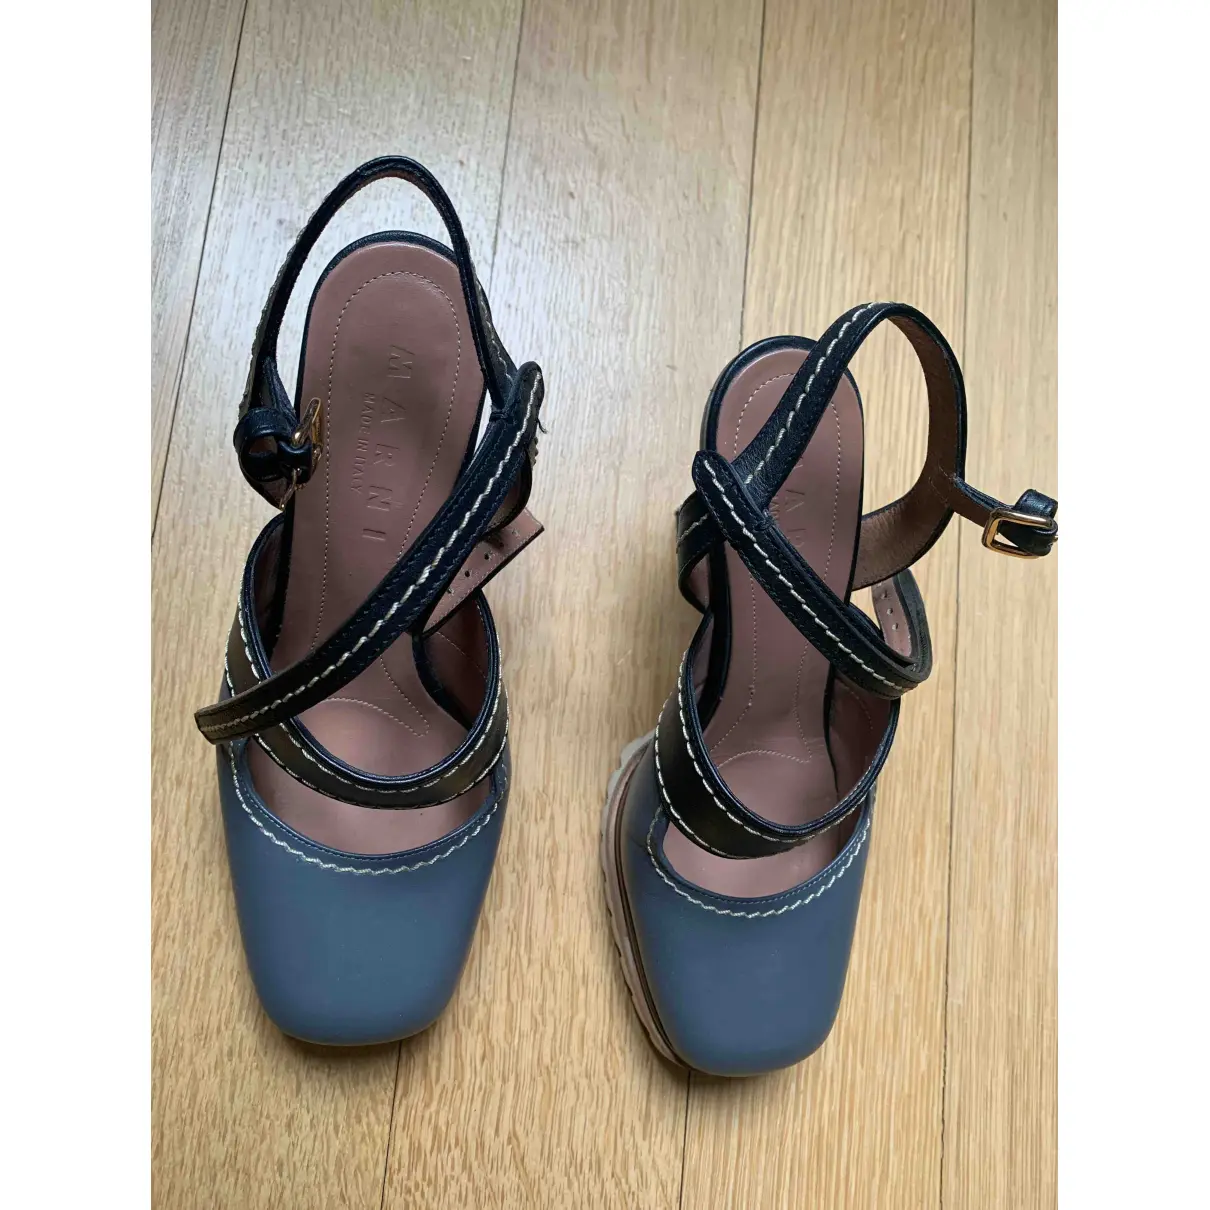 Buy Marni Leather sandal online